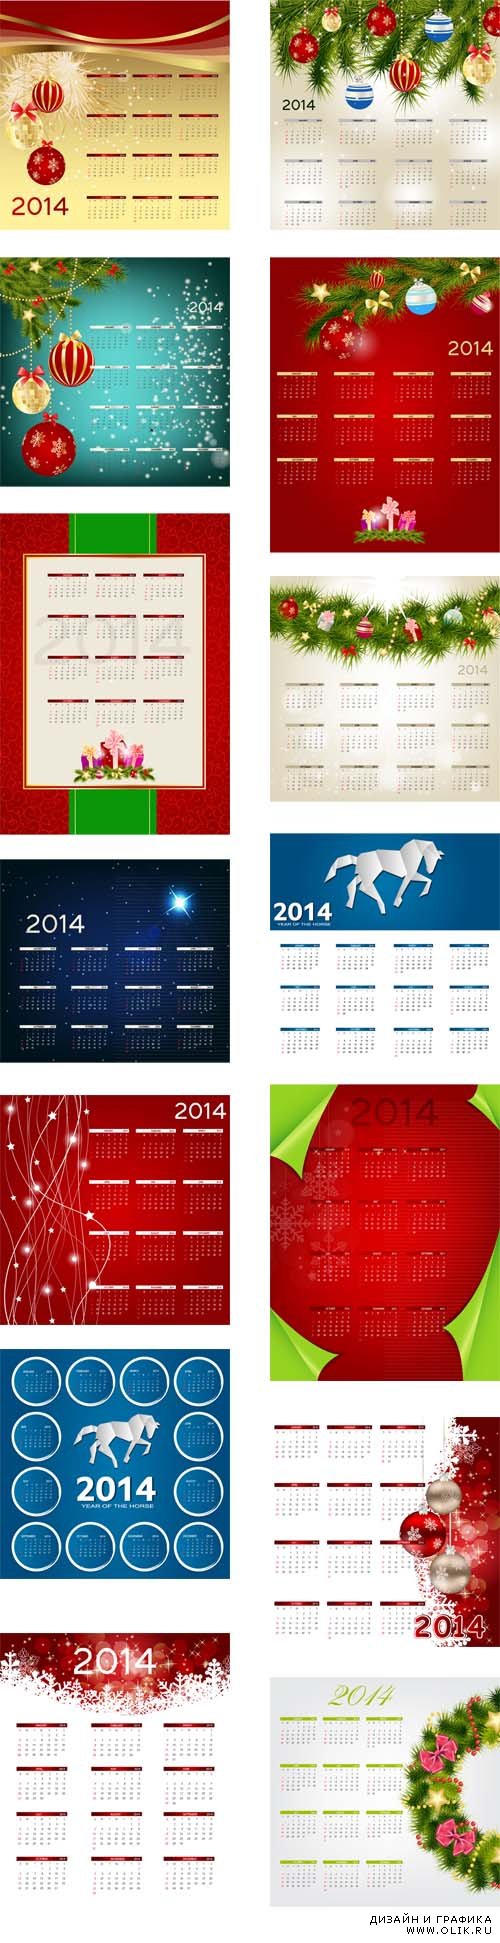 2014 calendar design 0538